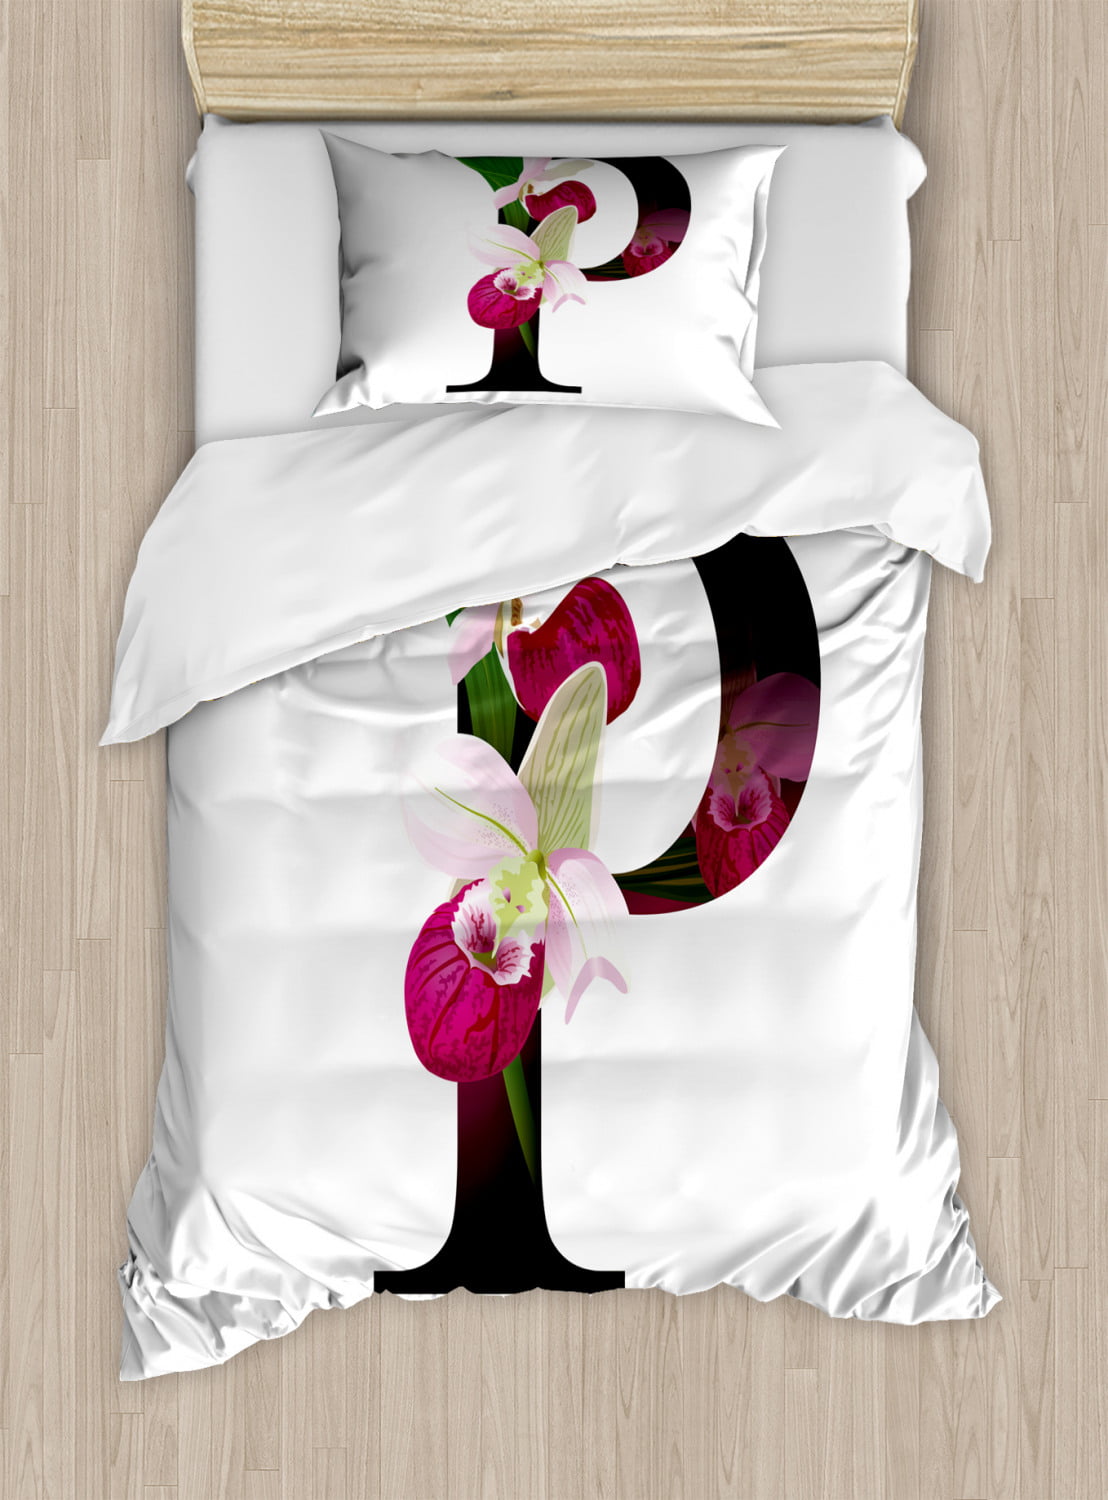 Decorative 2 Piece Bedding Set, Alphabet Twin Bed Sheets